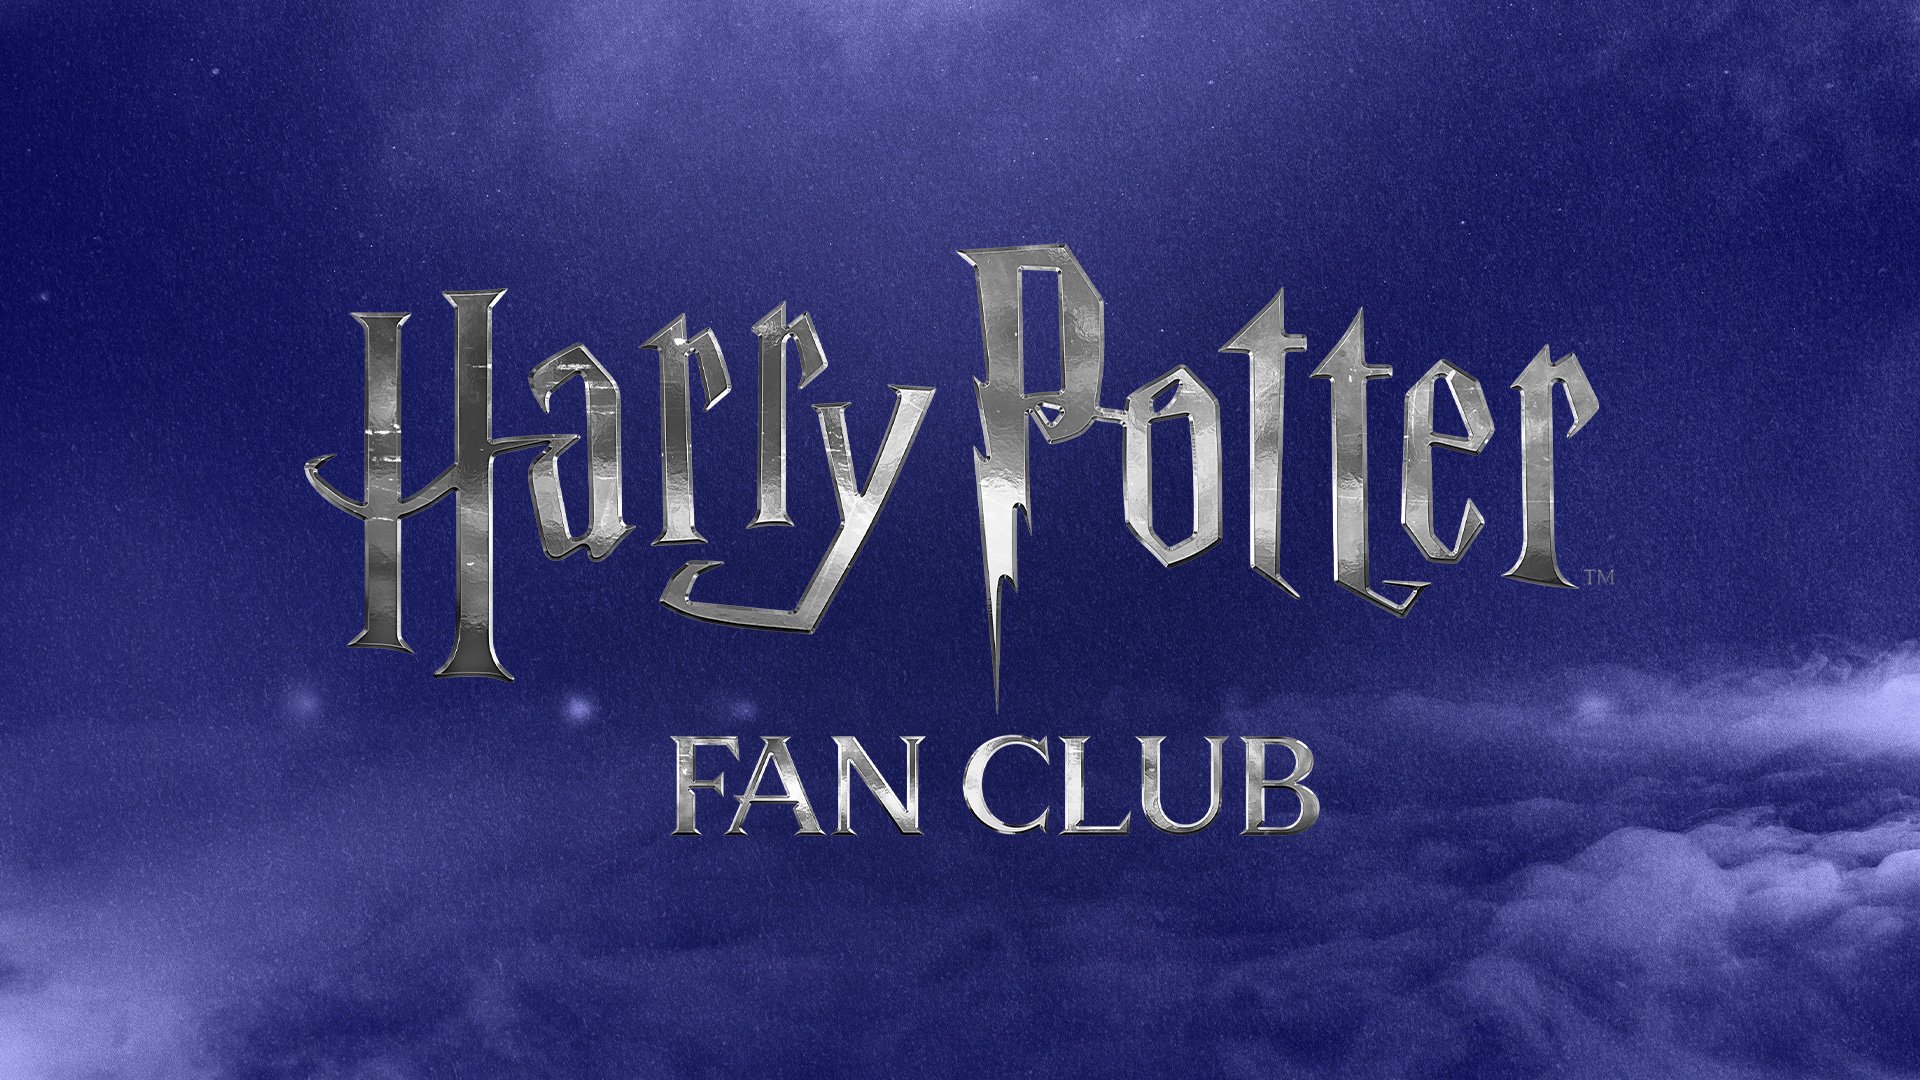 Harry Potter fans club